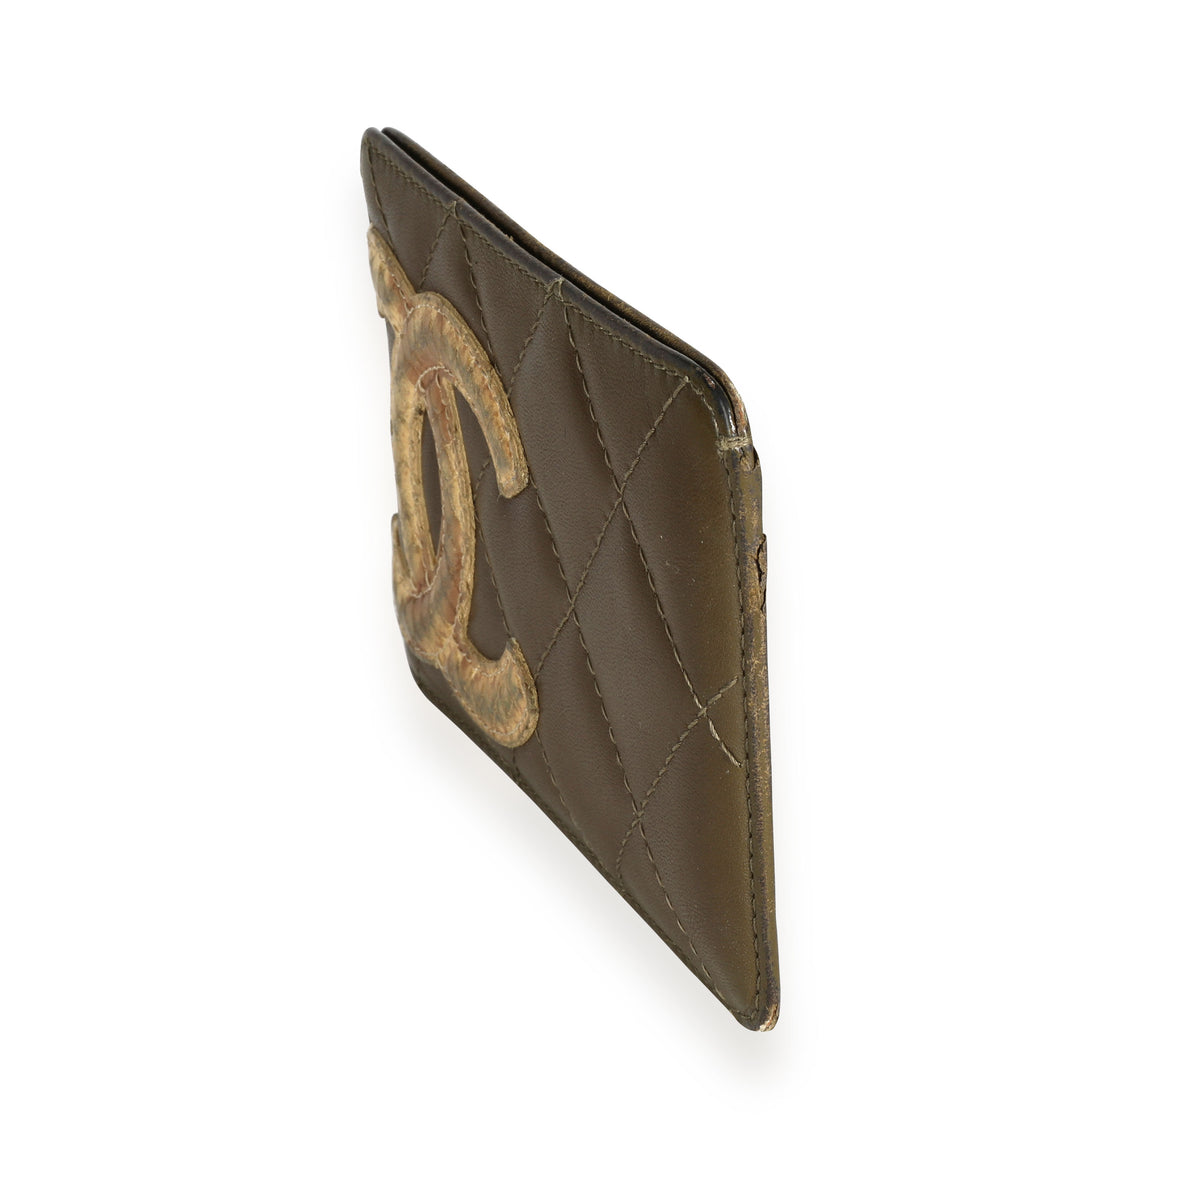 Chanel Olive Green Leather & Python Ligne Cambon Card Holder